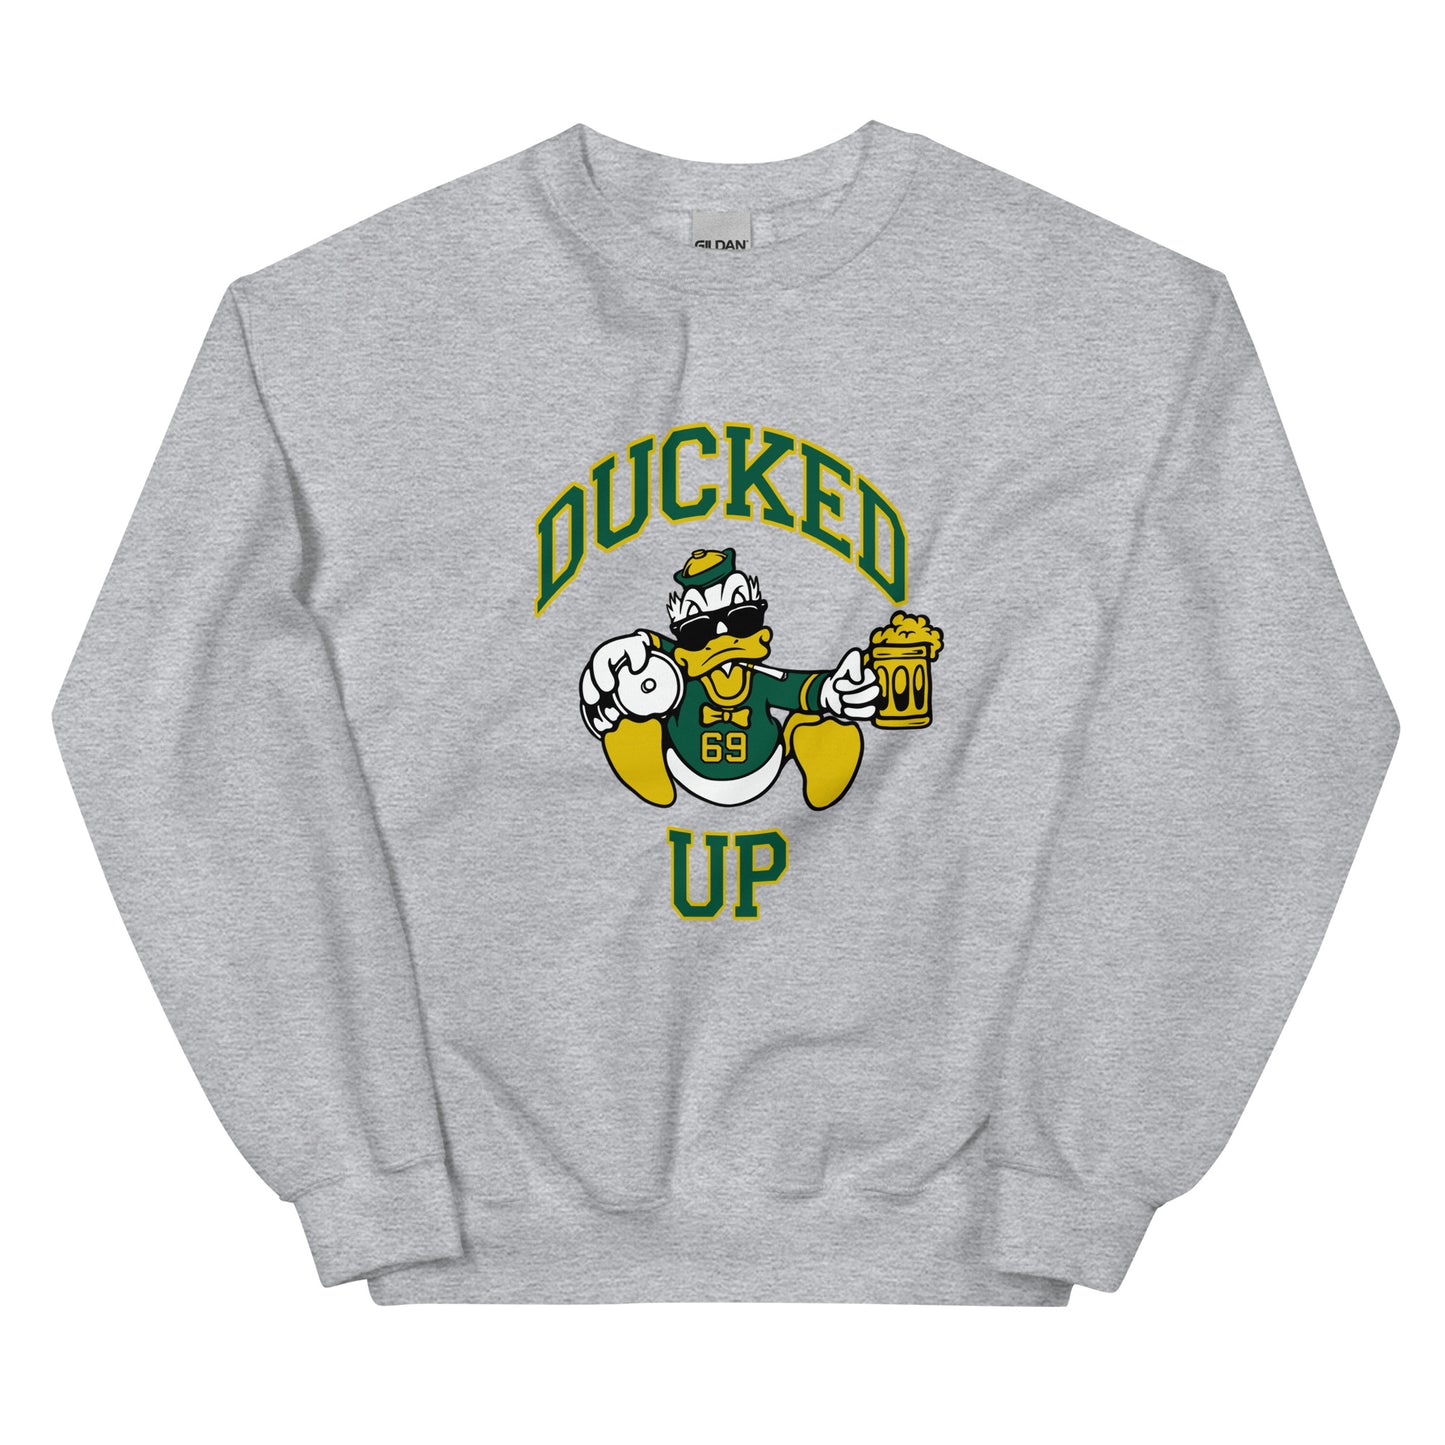 Ducked Up Sweatshirt